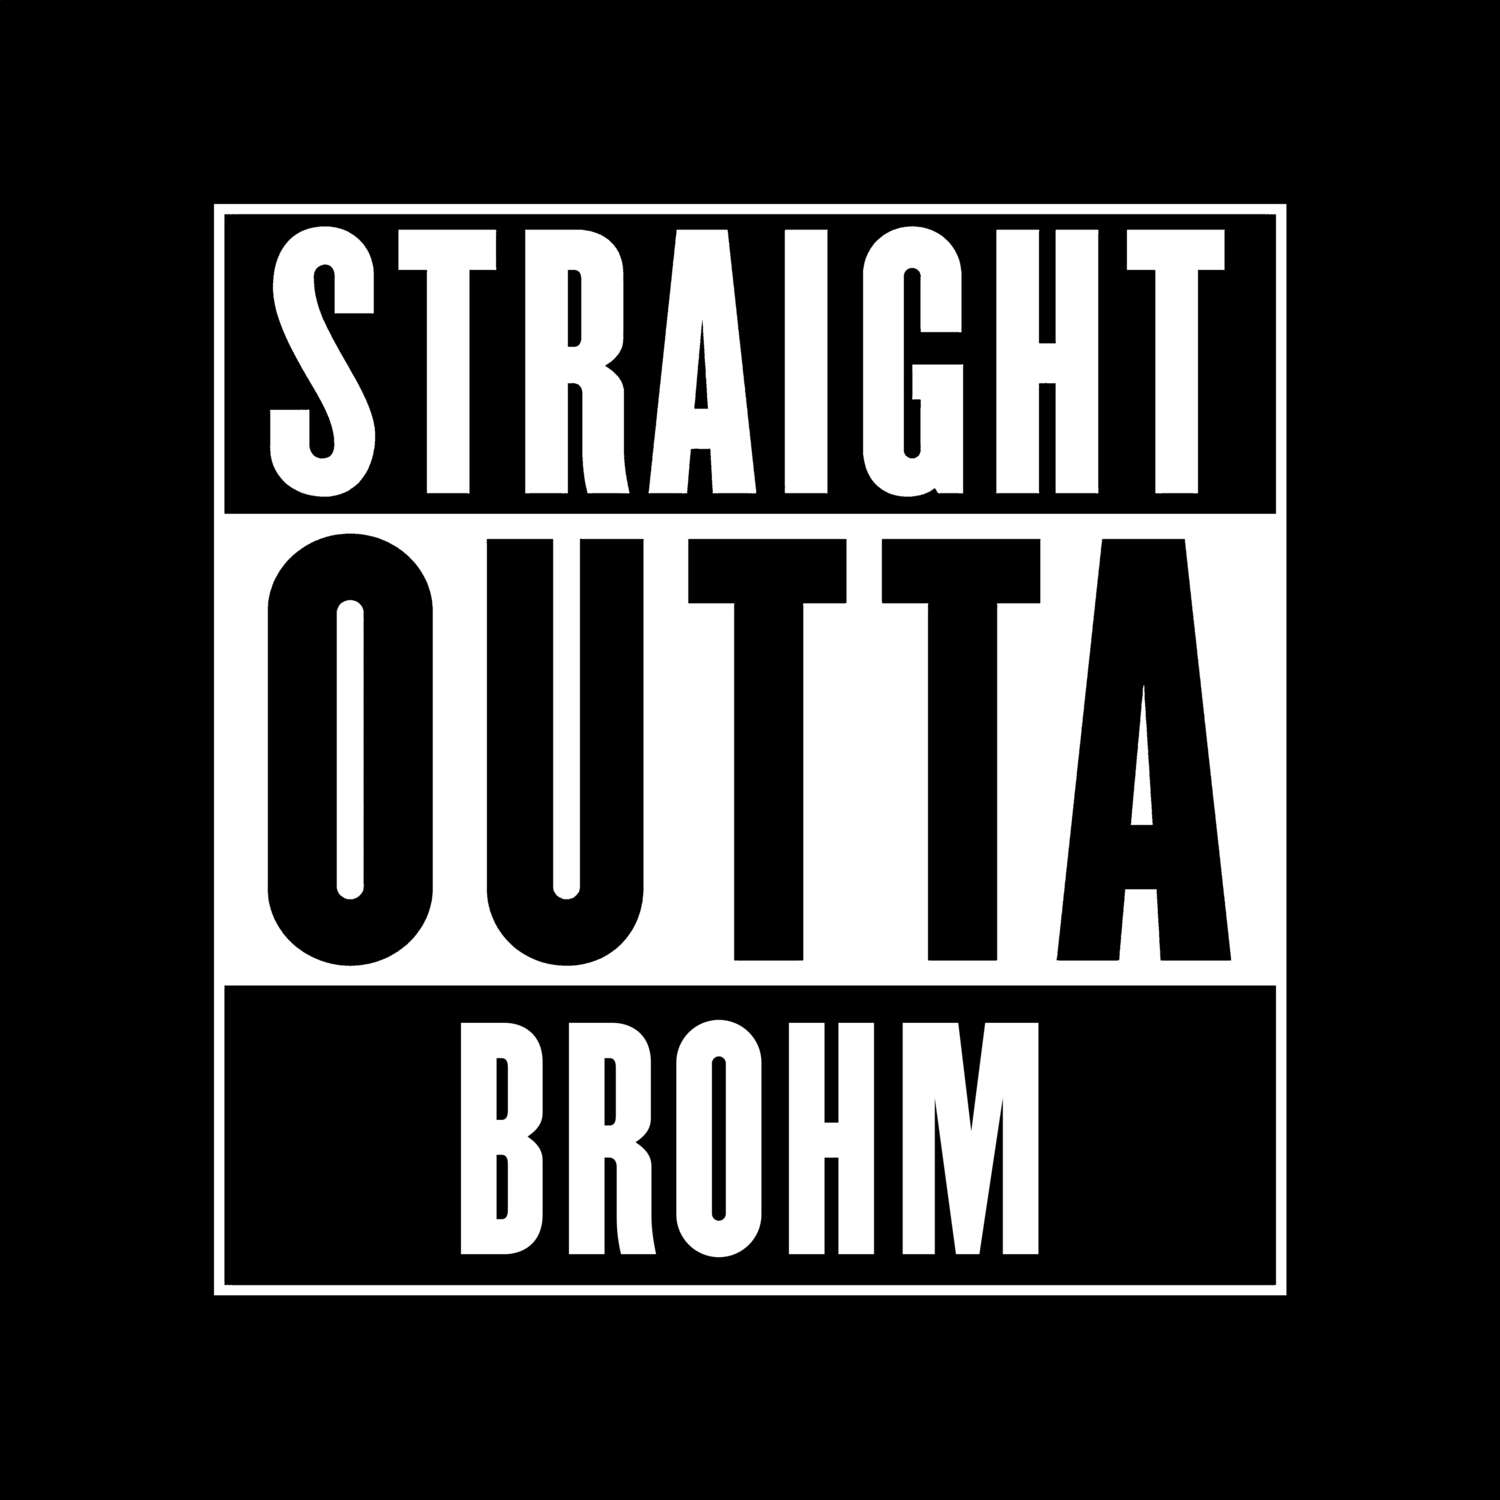 Brohm T-Shirt »Straight Outta«